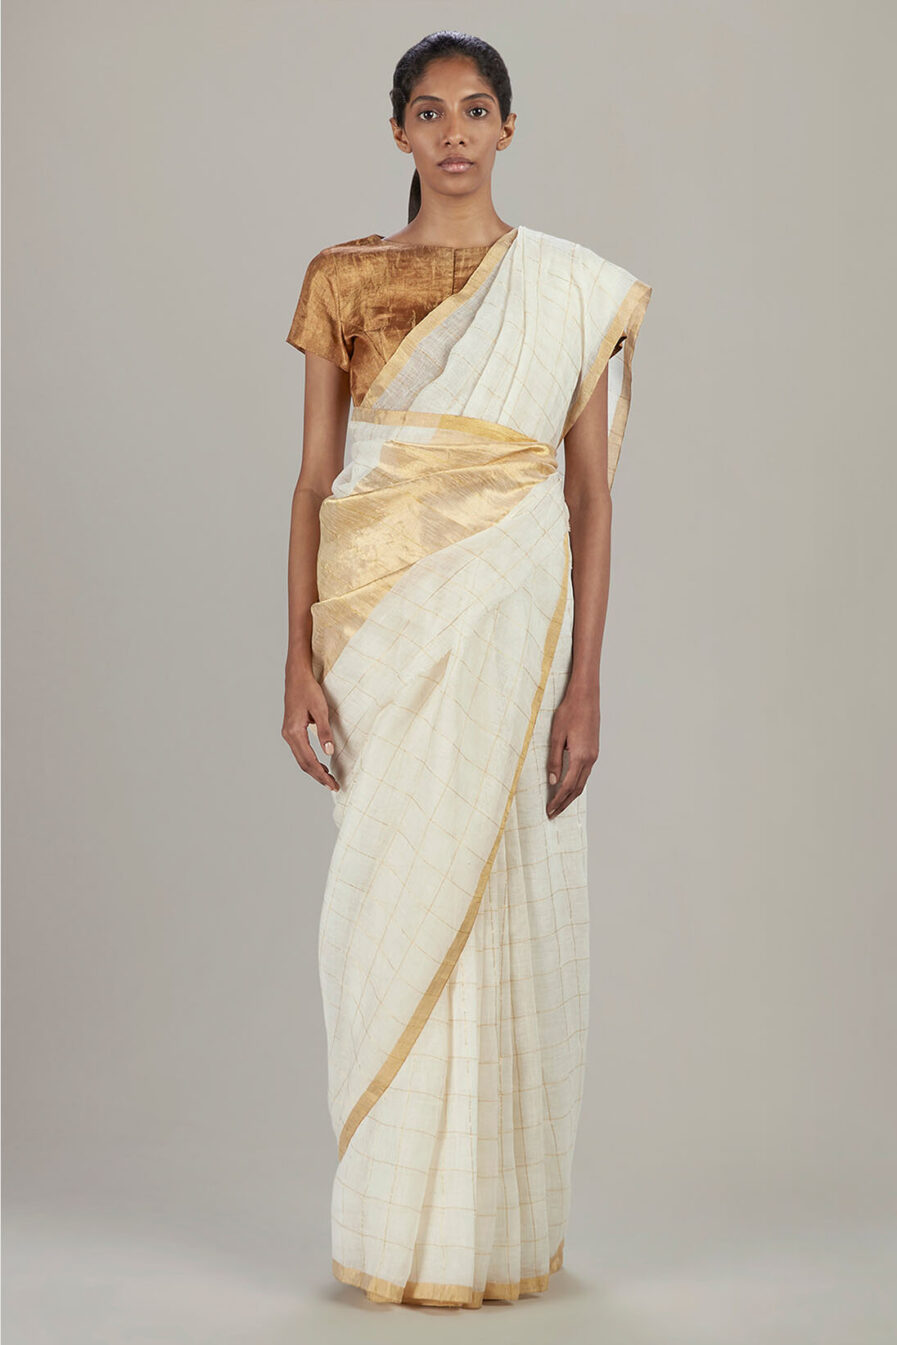 Anavil Golden checkered ivory sari